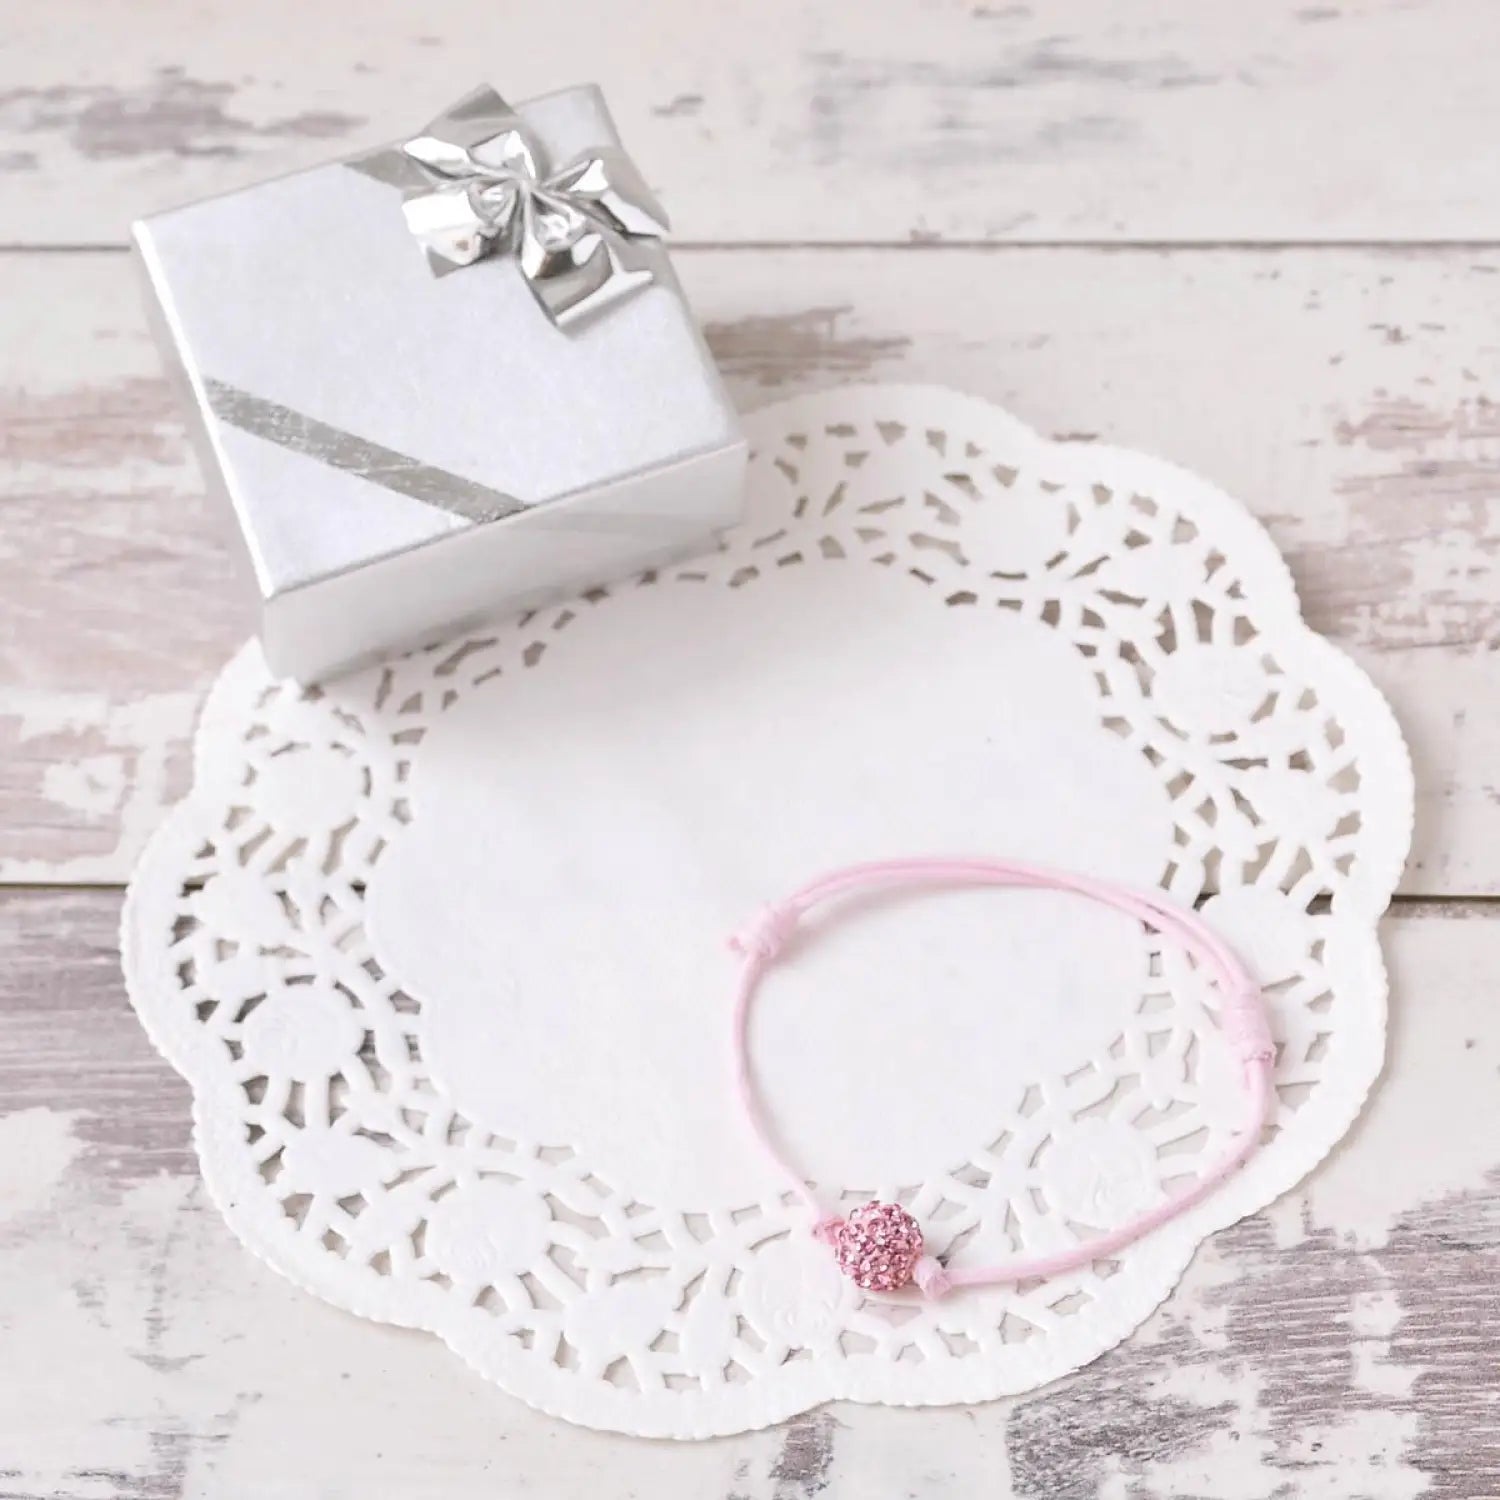 Adjustable Diamante Ball Friendship Bracelet - Cotton Cord Design with Pink Ribbon Embellishment